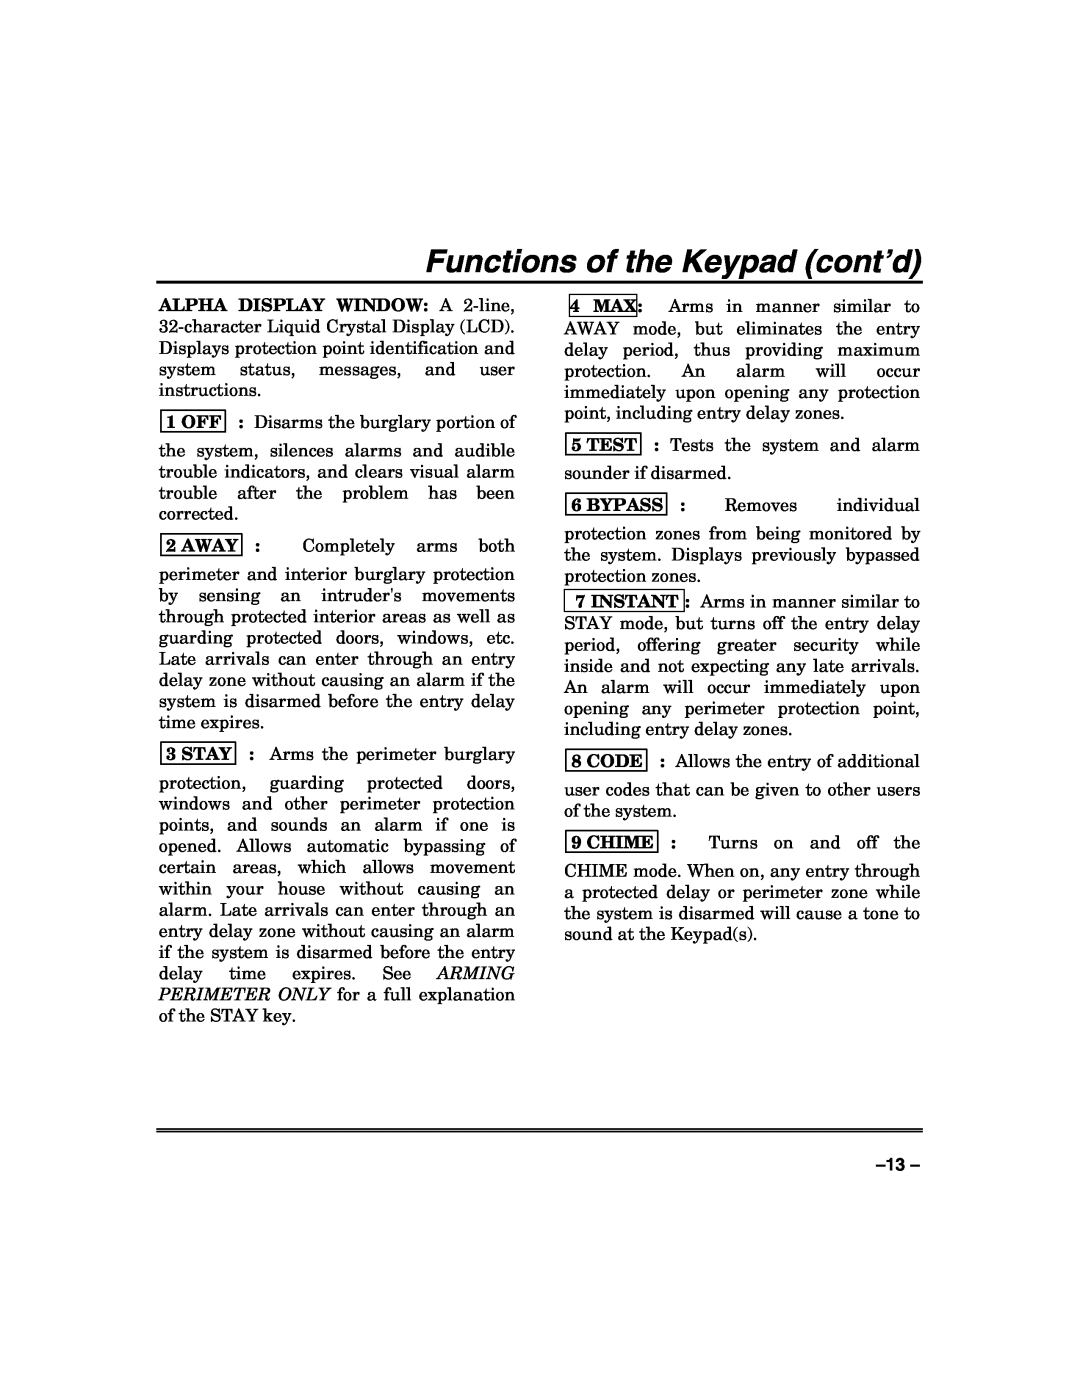 Honeywell VISTA-128FBP, VISTA-250FBP manual Functions of the Keypad cont’d, Test, Bypass 